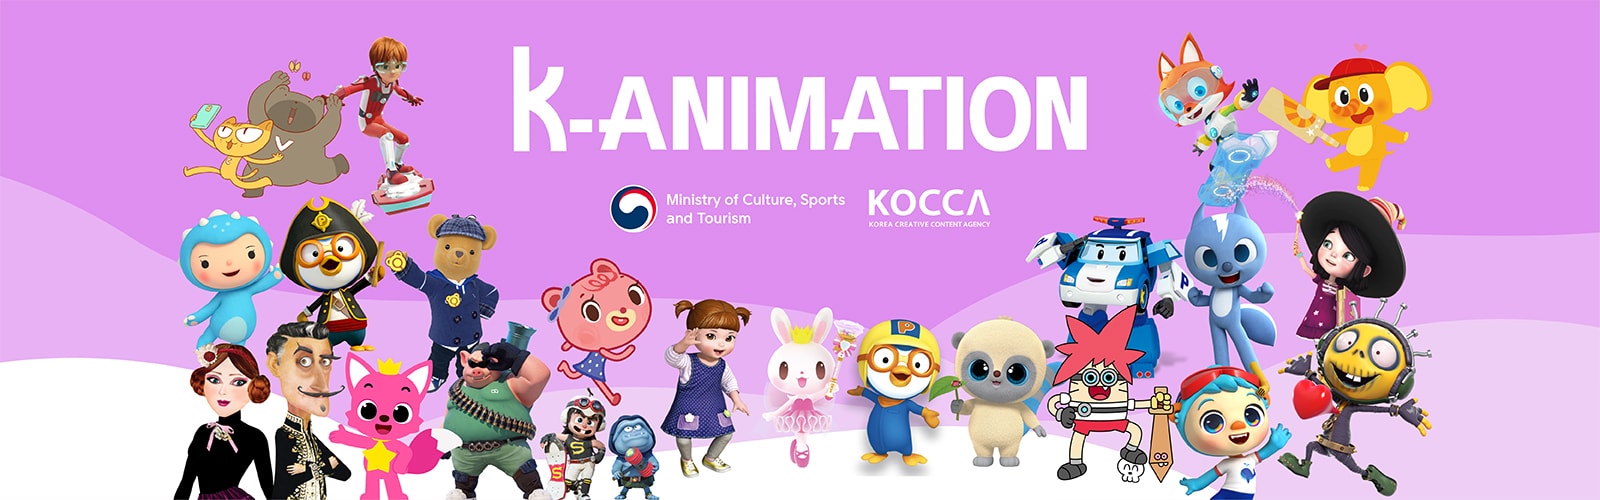 KOCCA Creative Content Agency - Animation